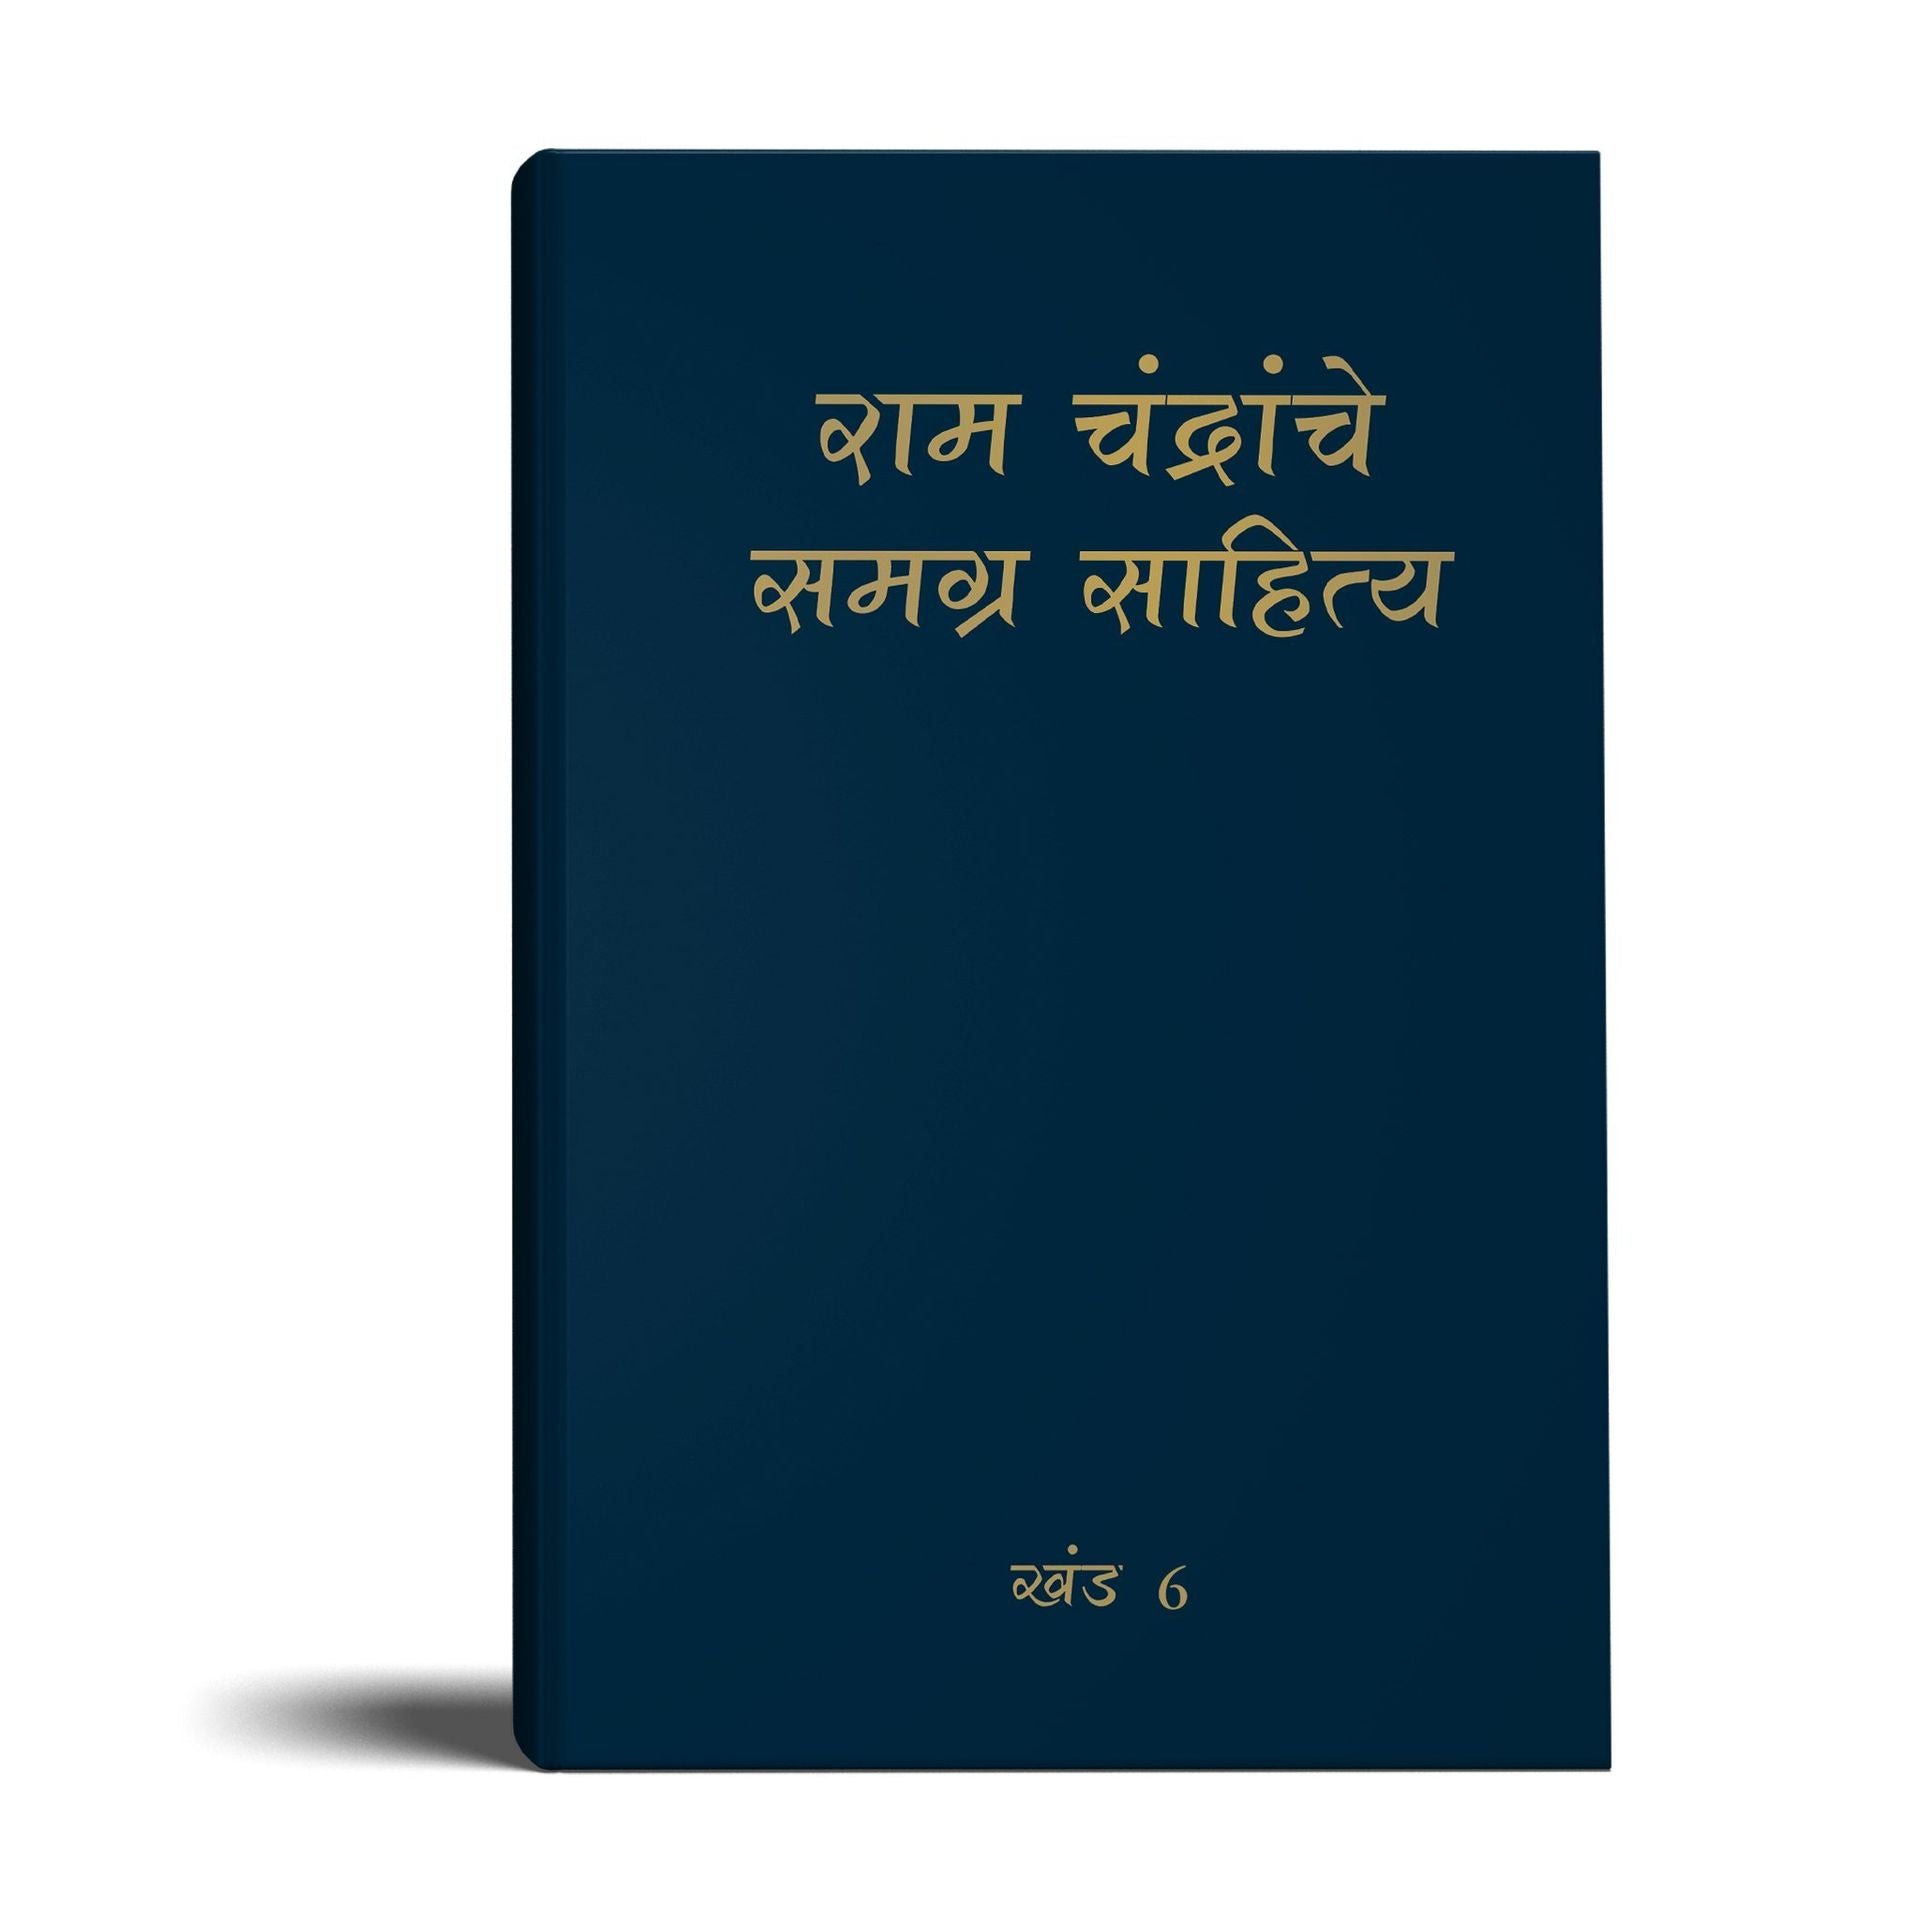 Complete Works of Ram Chandra (Babuji) - Volume 6 - hfnl!fe